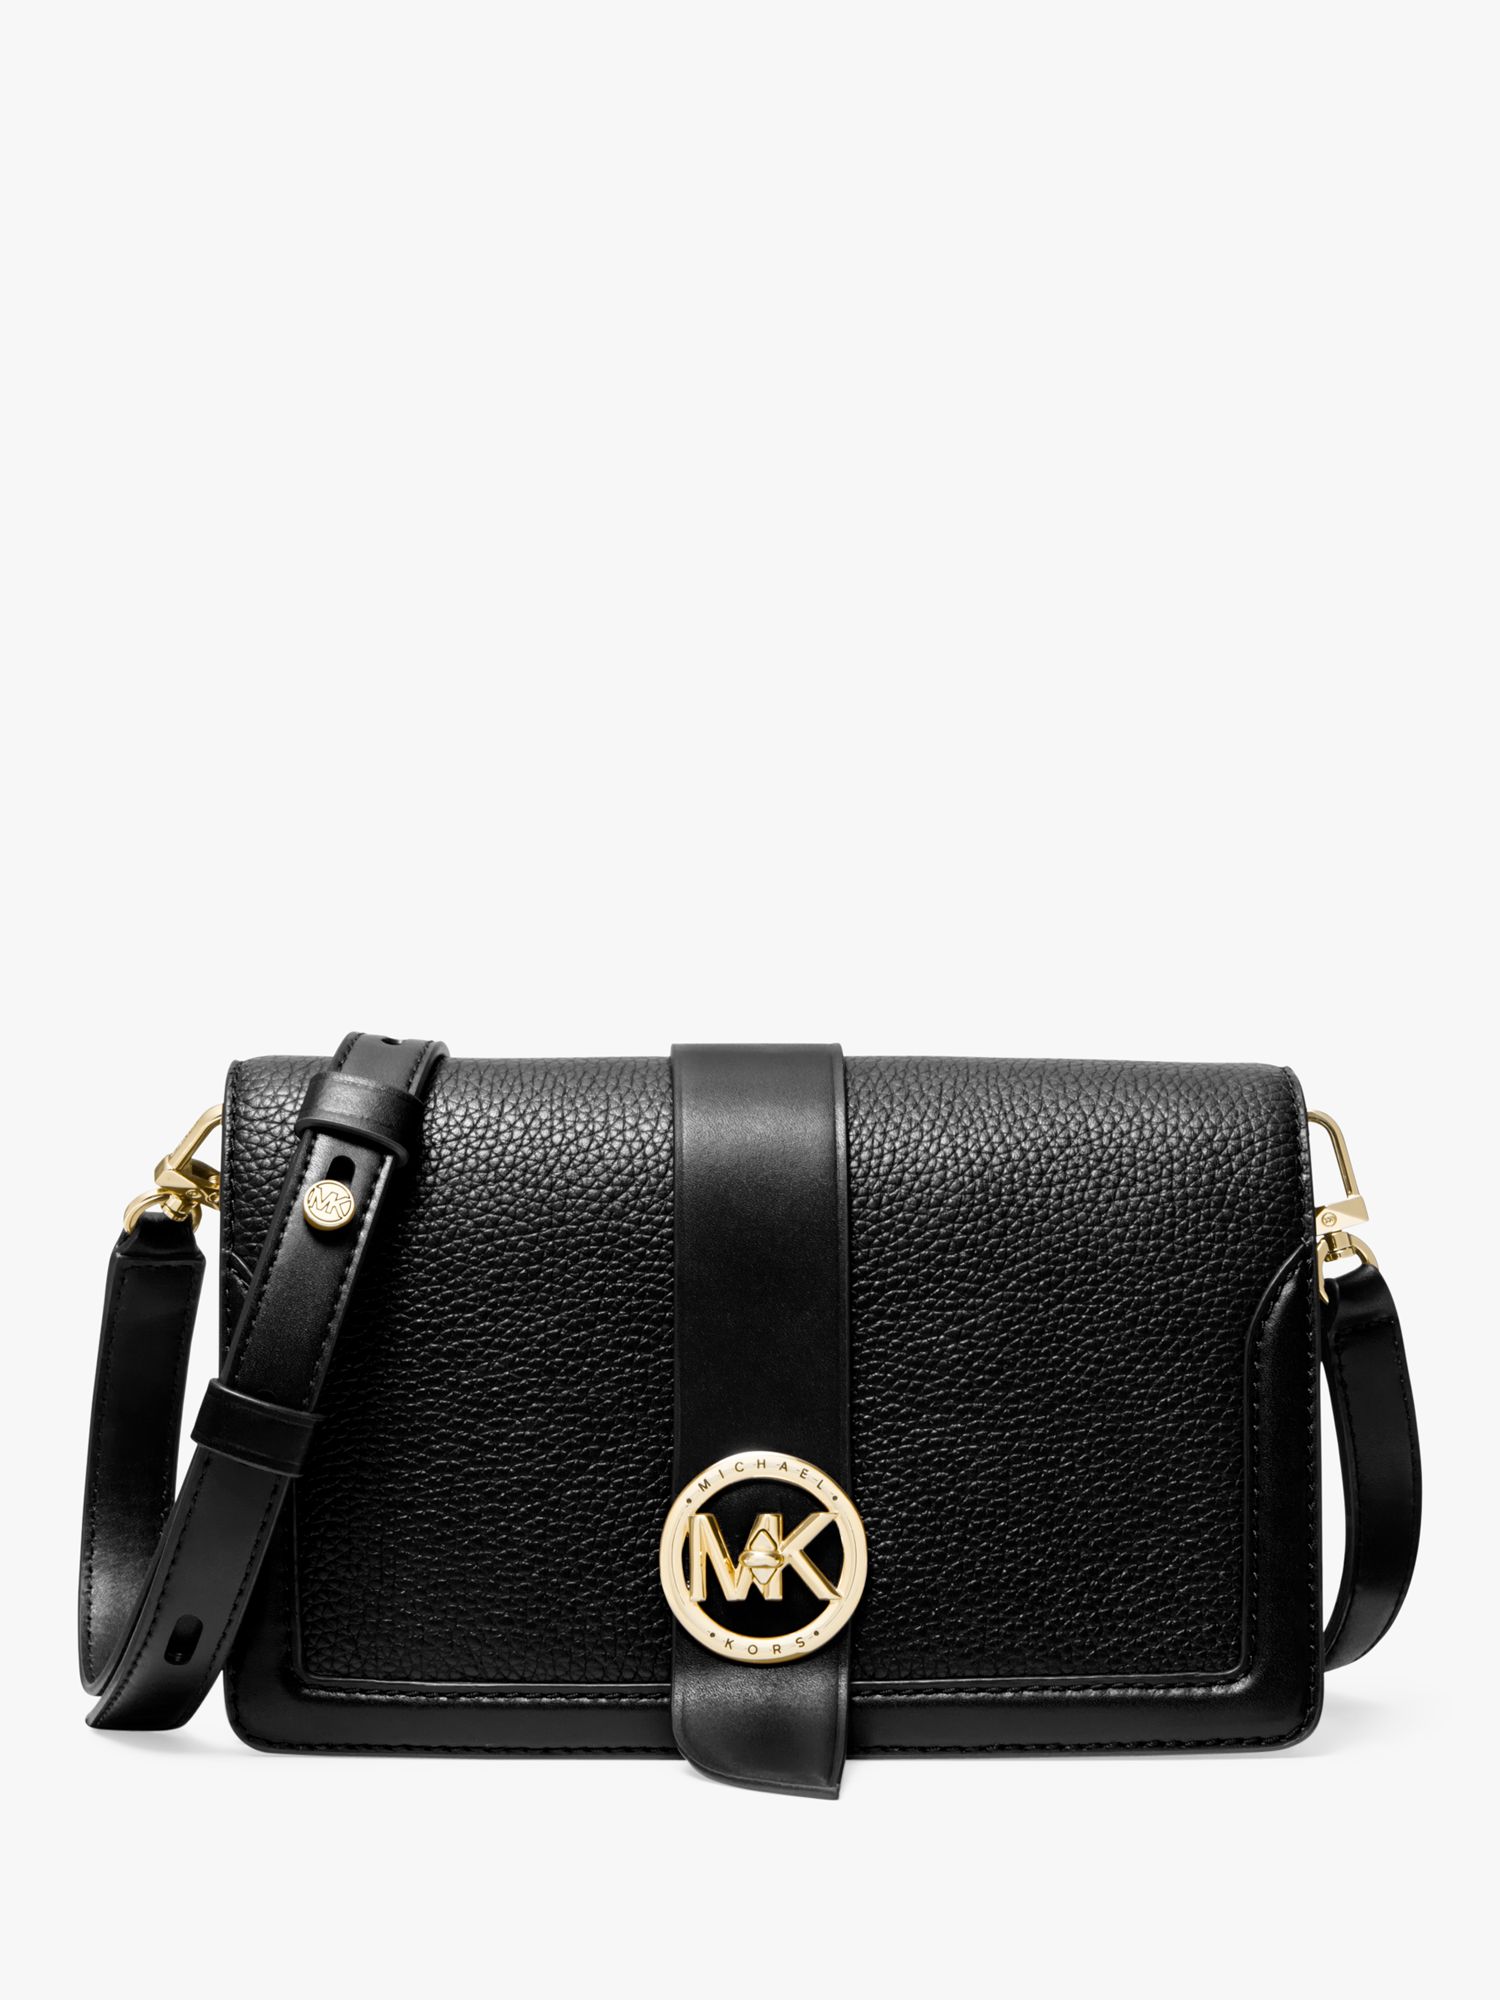 michael kors clearance handbags